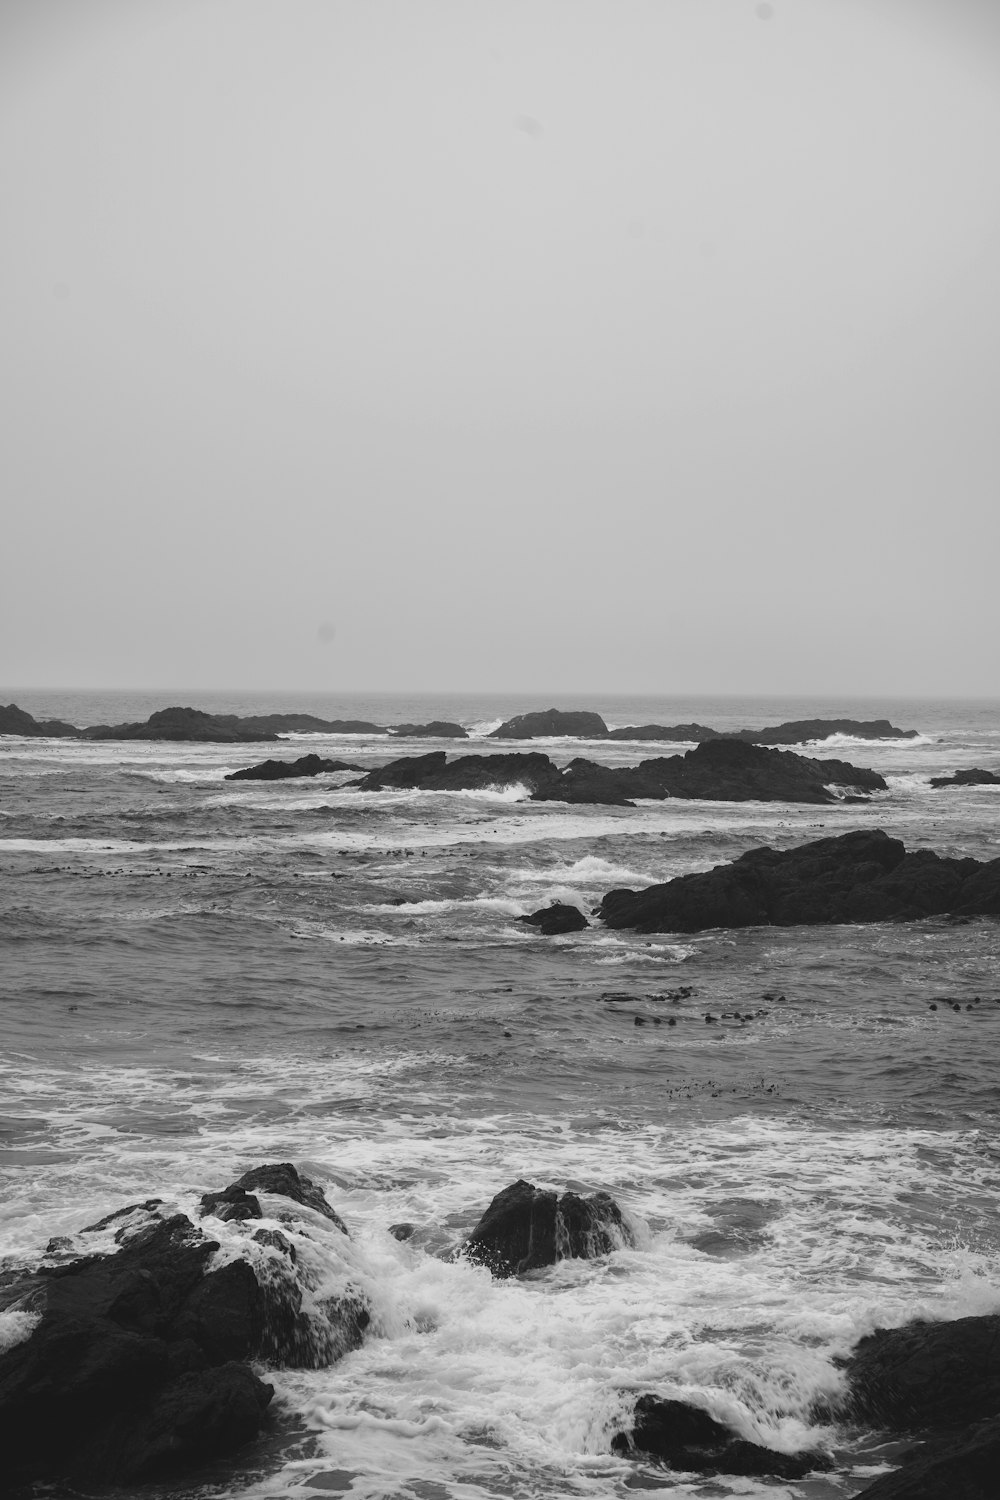 grayscale photo of rocky shore